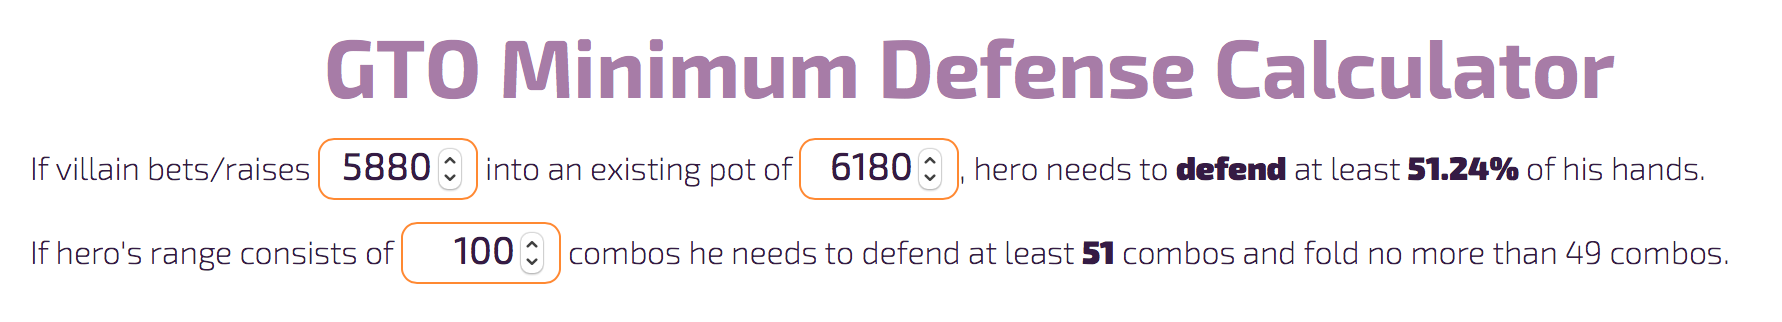 minimum-defense.png